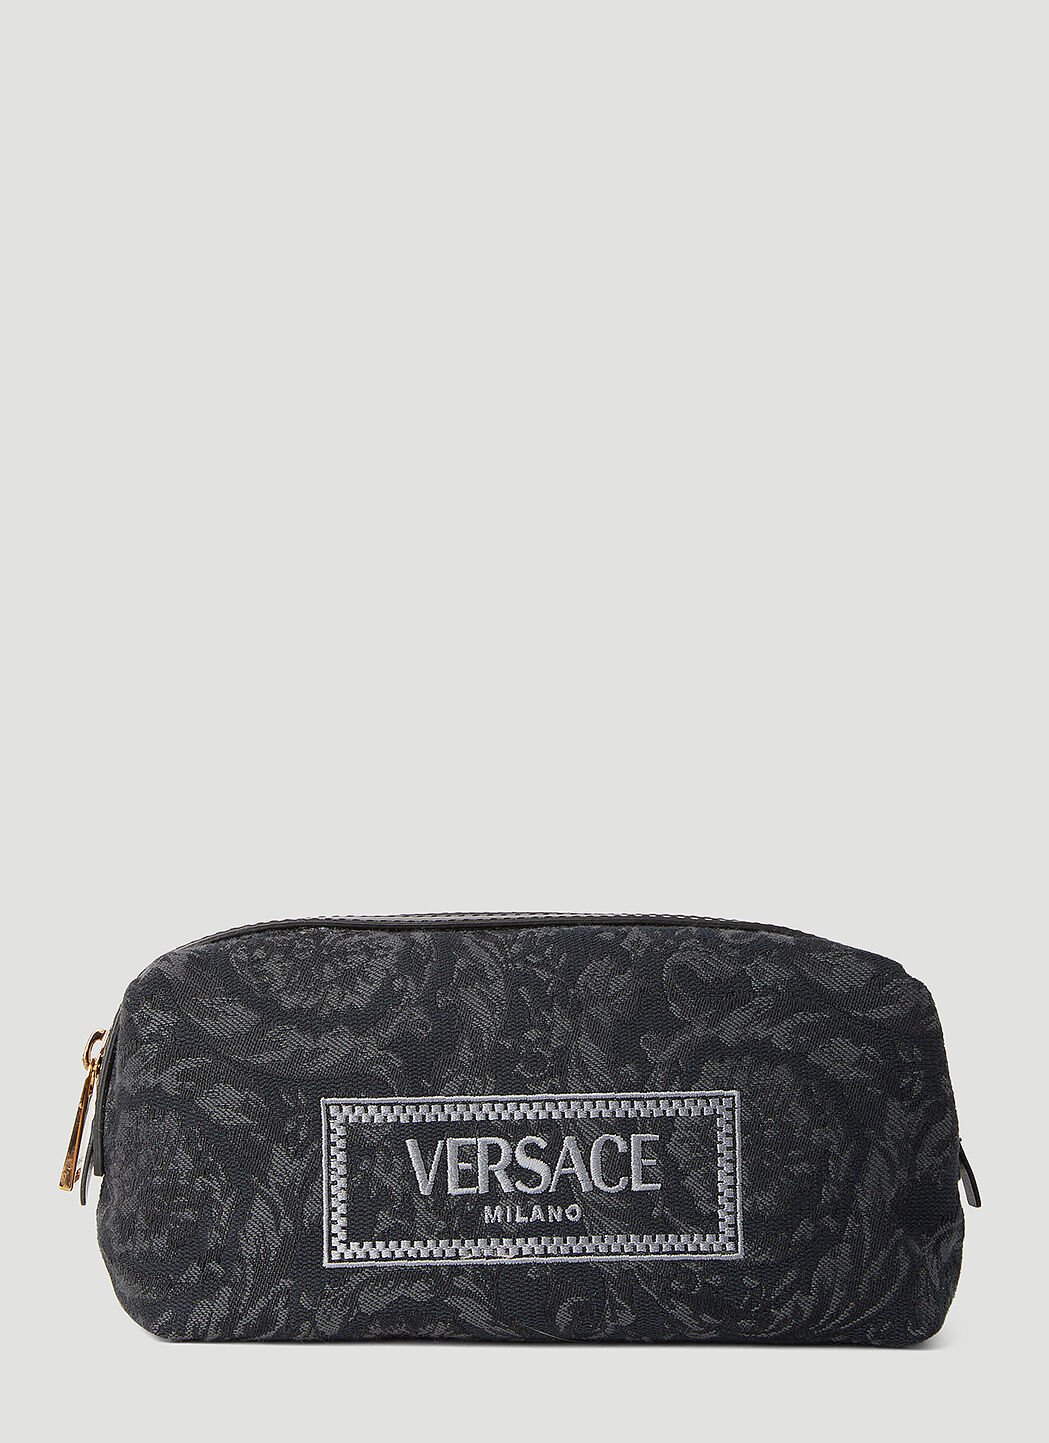 Versace Barocco Athena Jacquard Vanity Pouch Black ver0251025